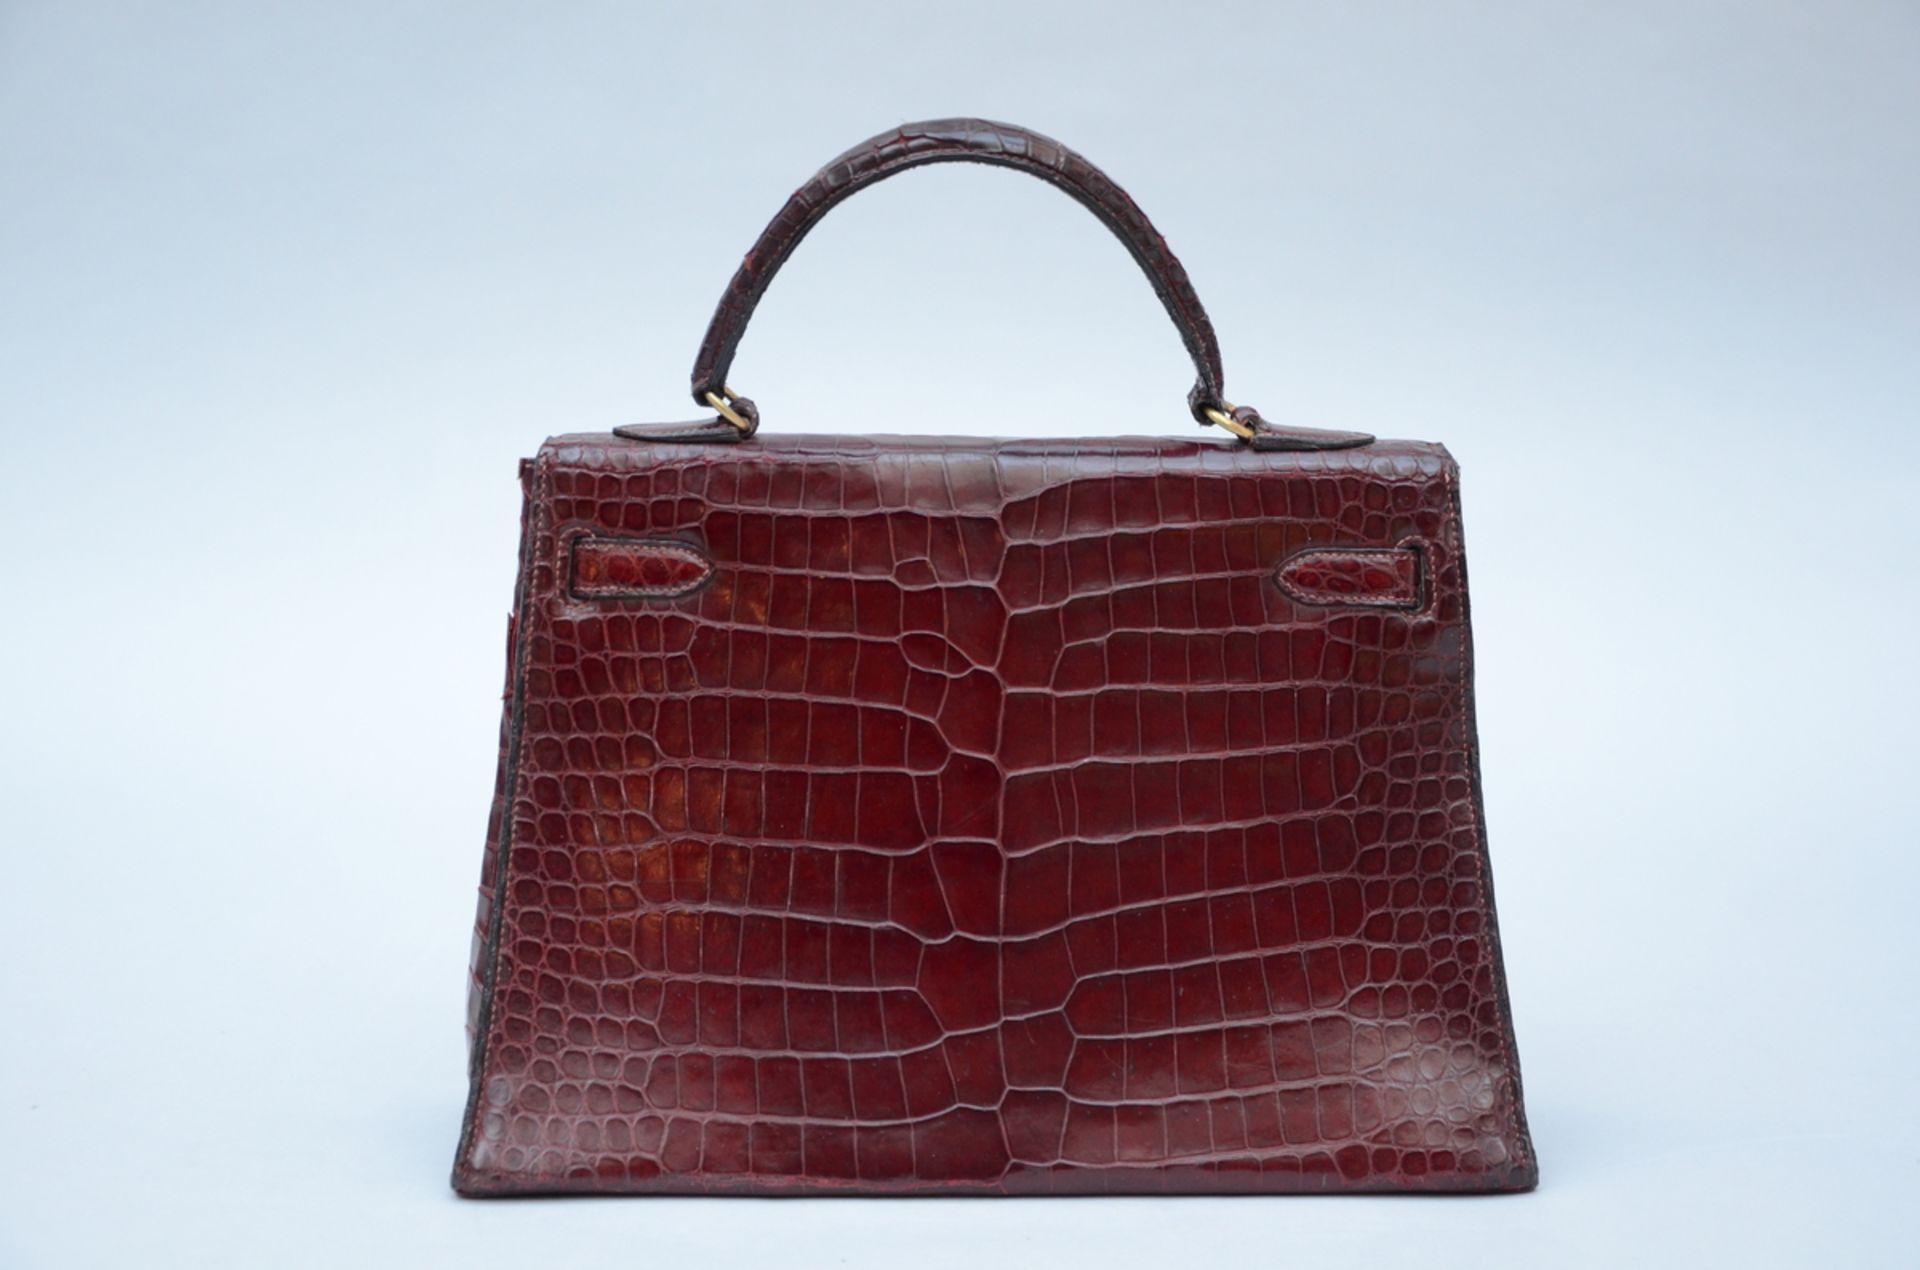 Handbag 'Kelly' ?Hermes?, bordeaux croco (22x34x12) (*) - Image 3 of 6